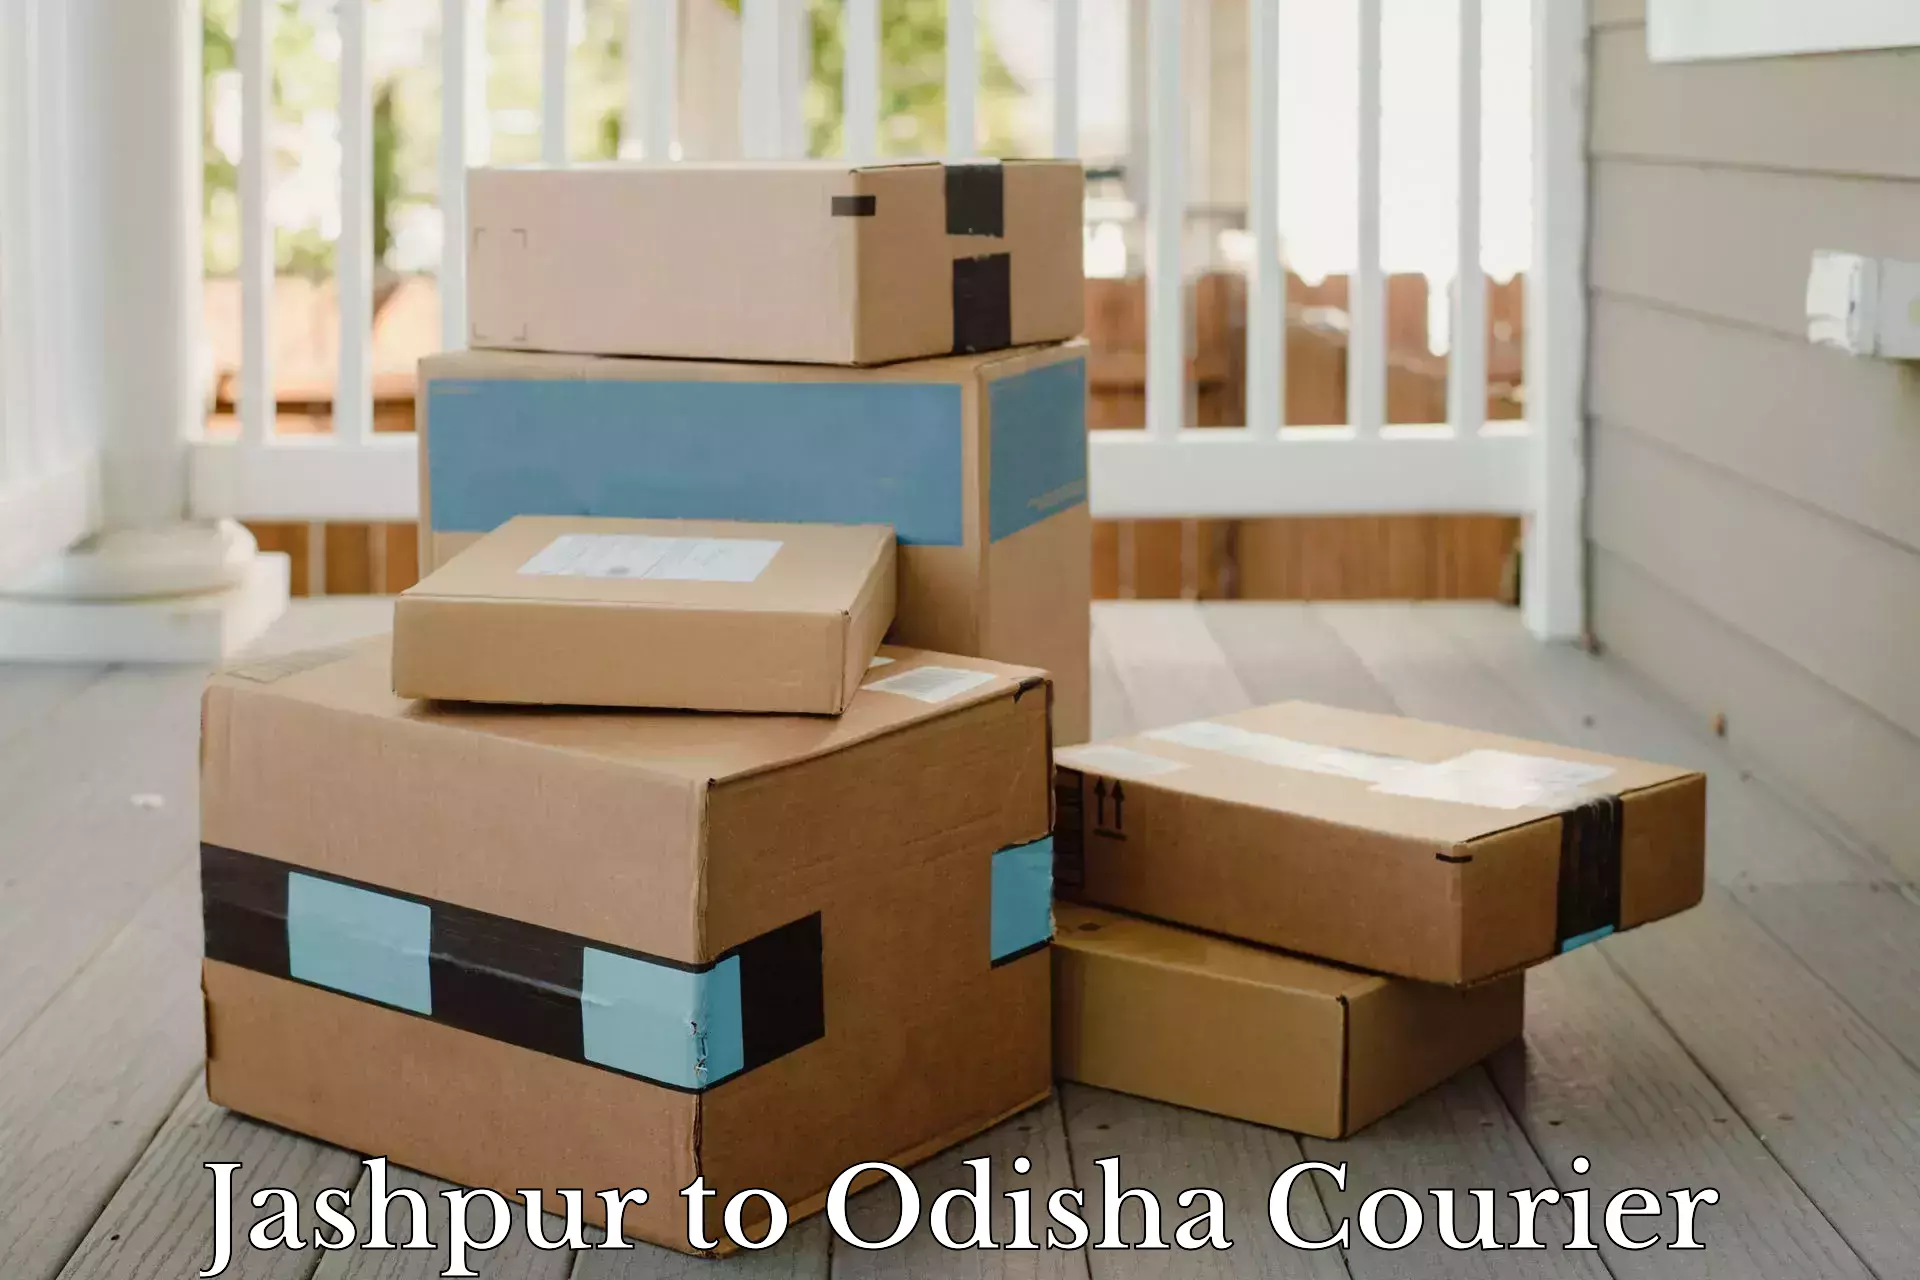 Express courier capabilities Jashpur to Odisha